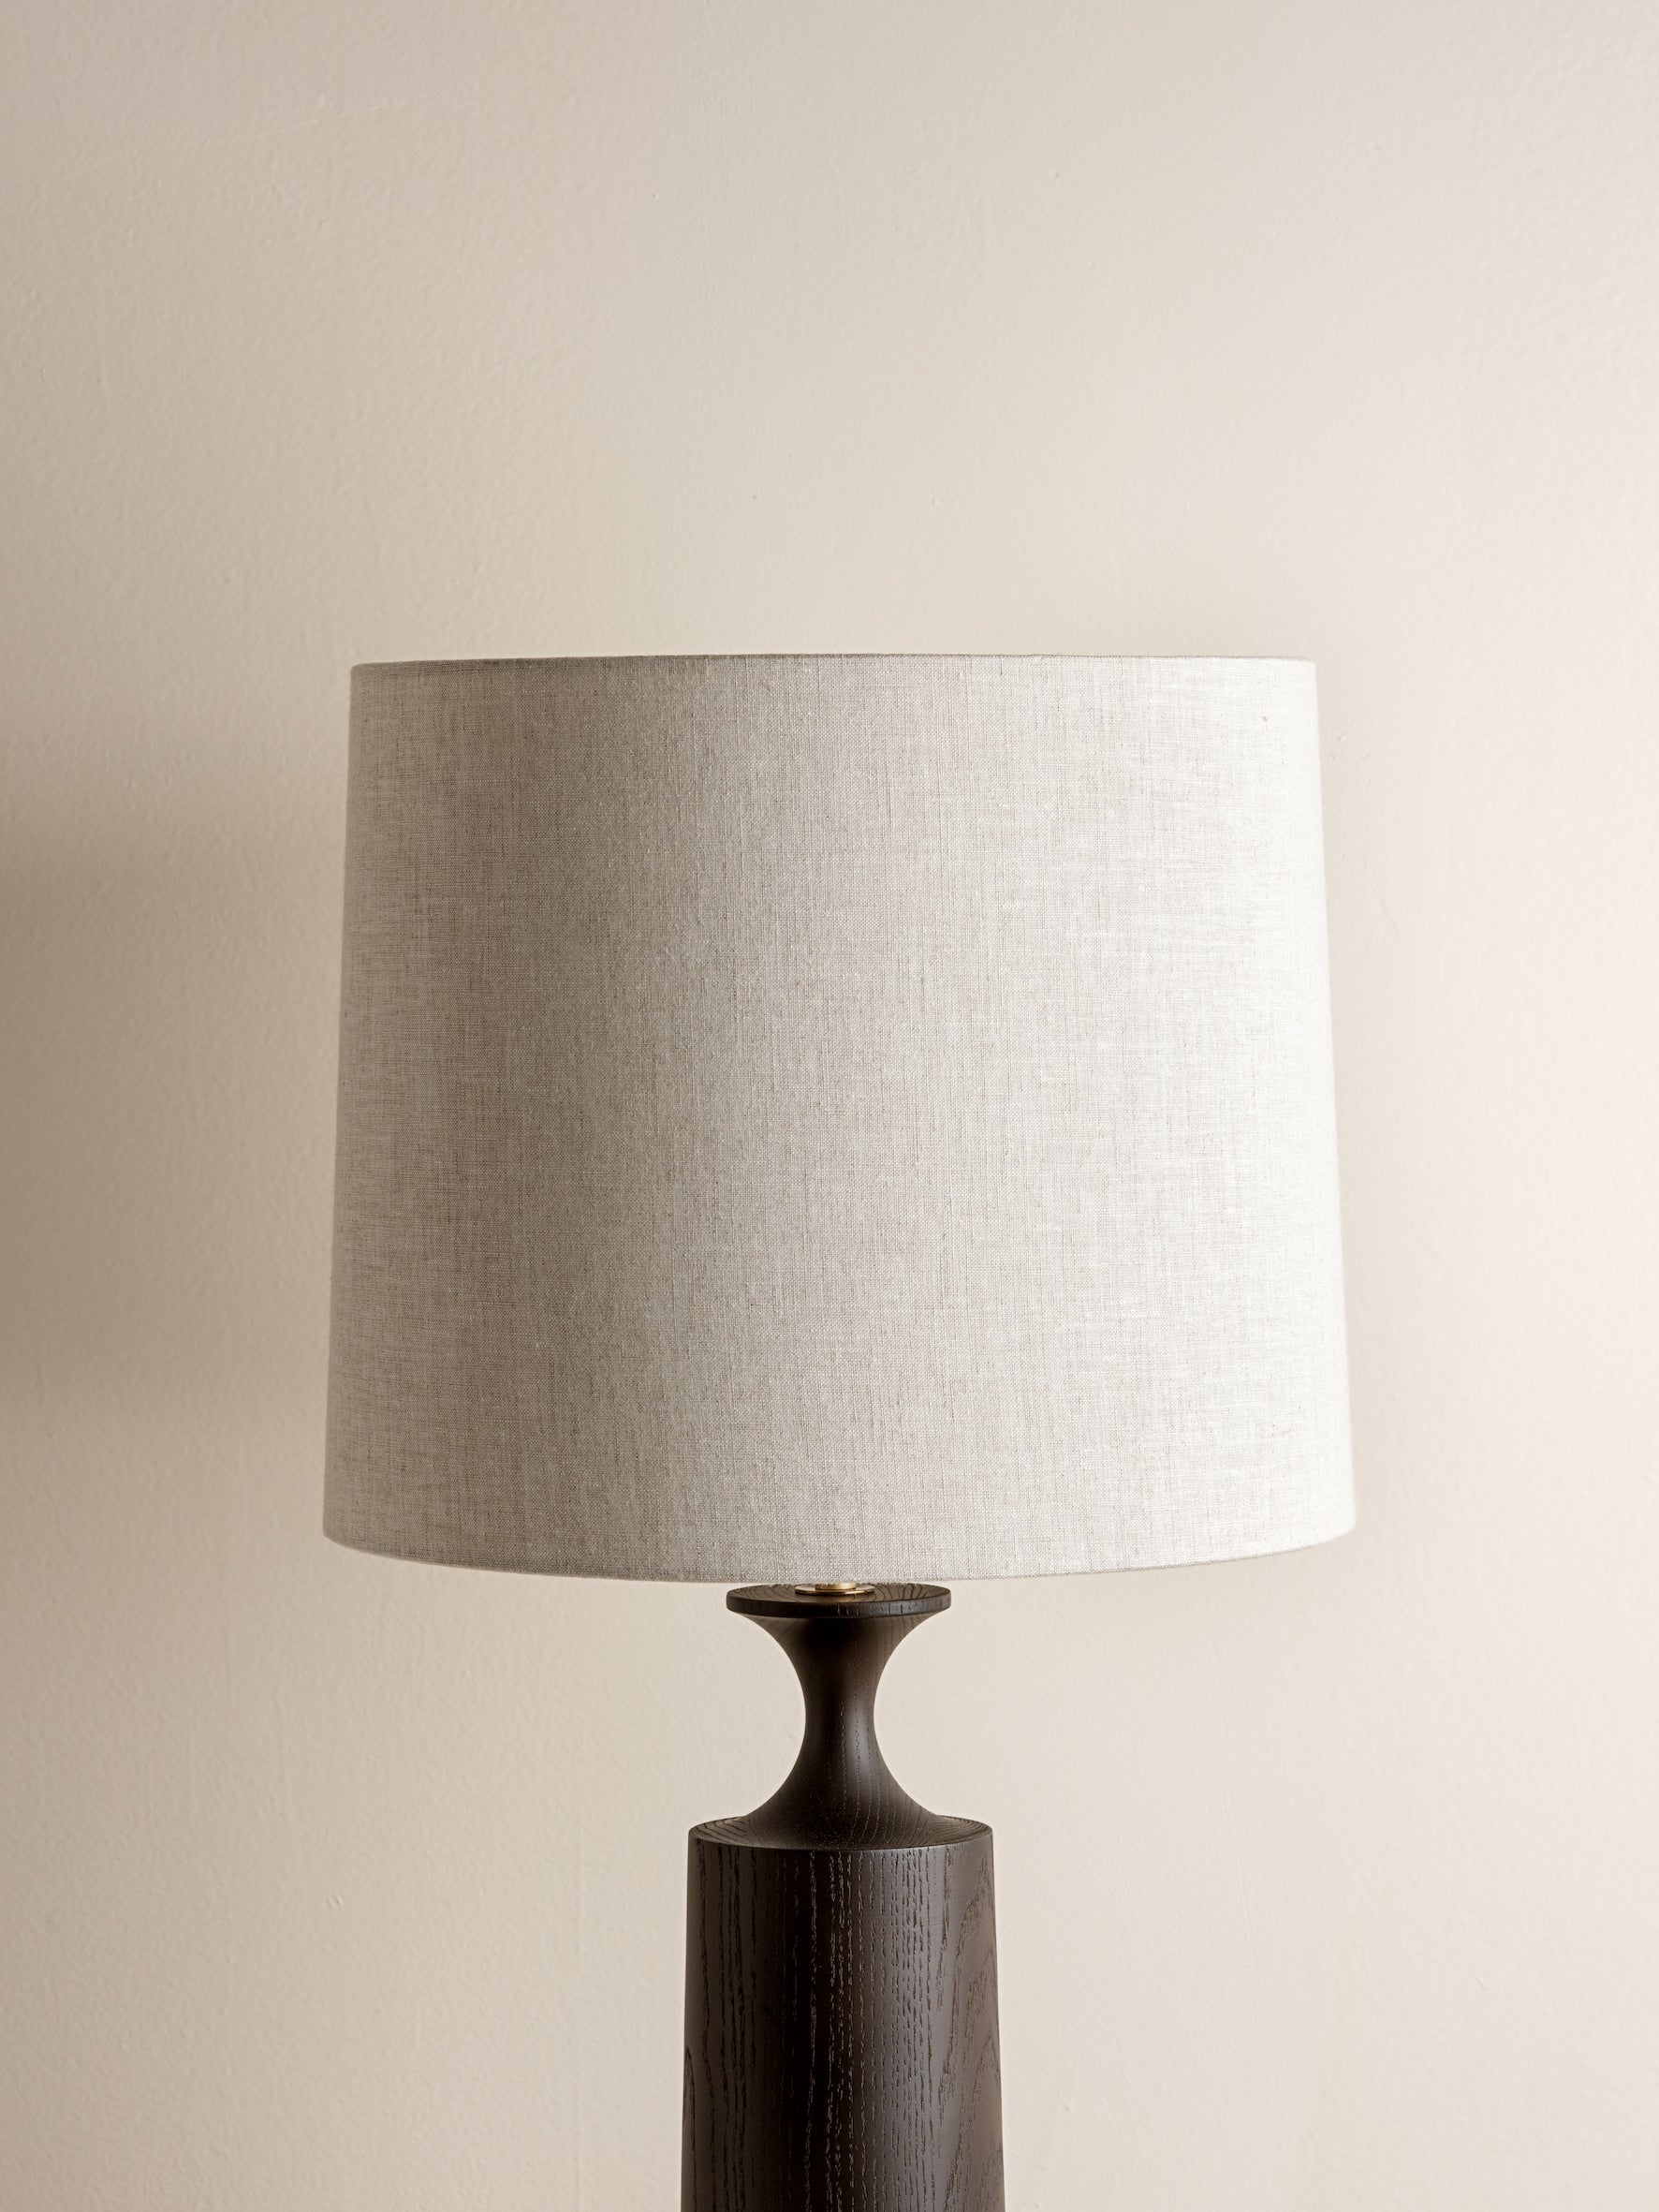 Morton - dark wood and linen table lamp | Table Lamp | Lights & Lamps Inc | Modern Affordable Designer Lighting | USA